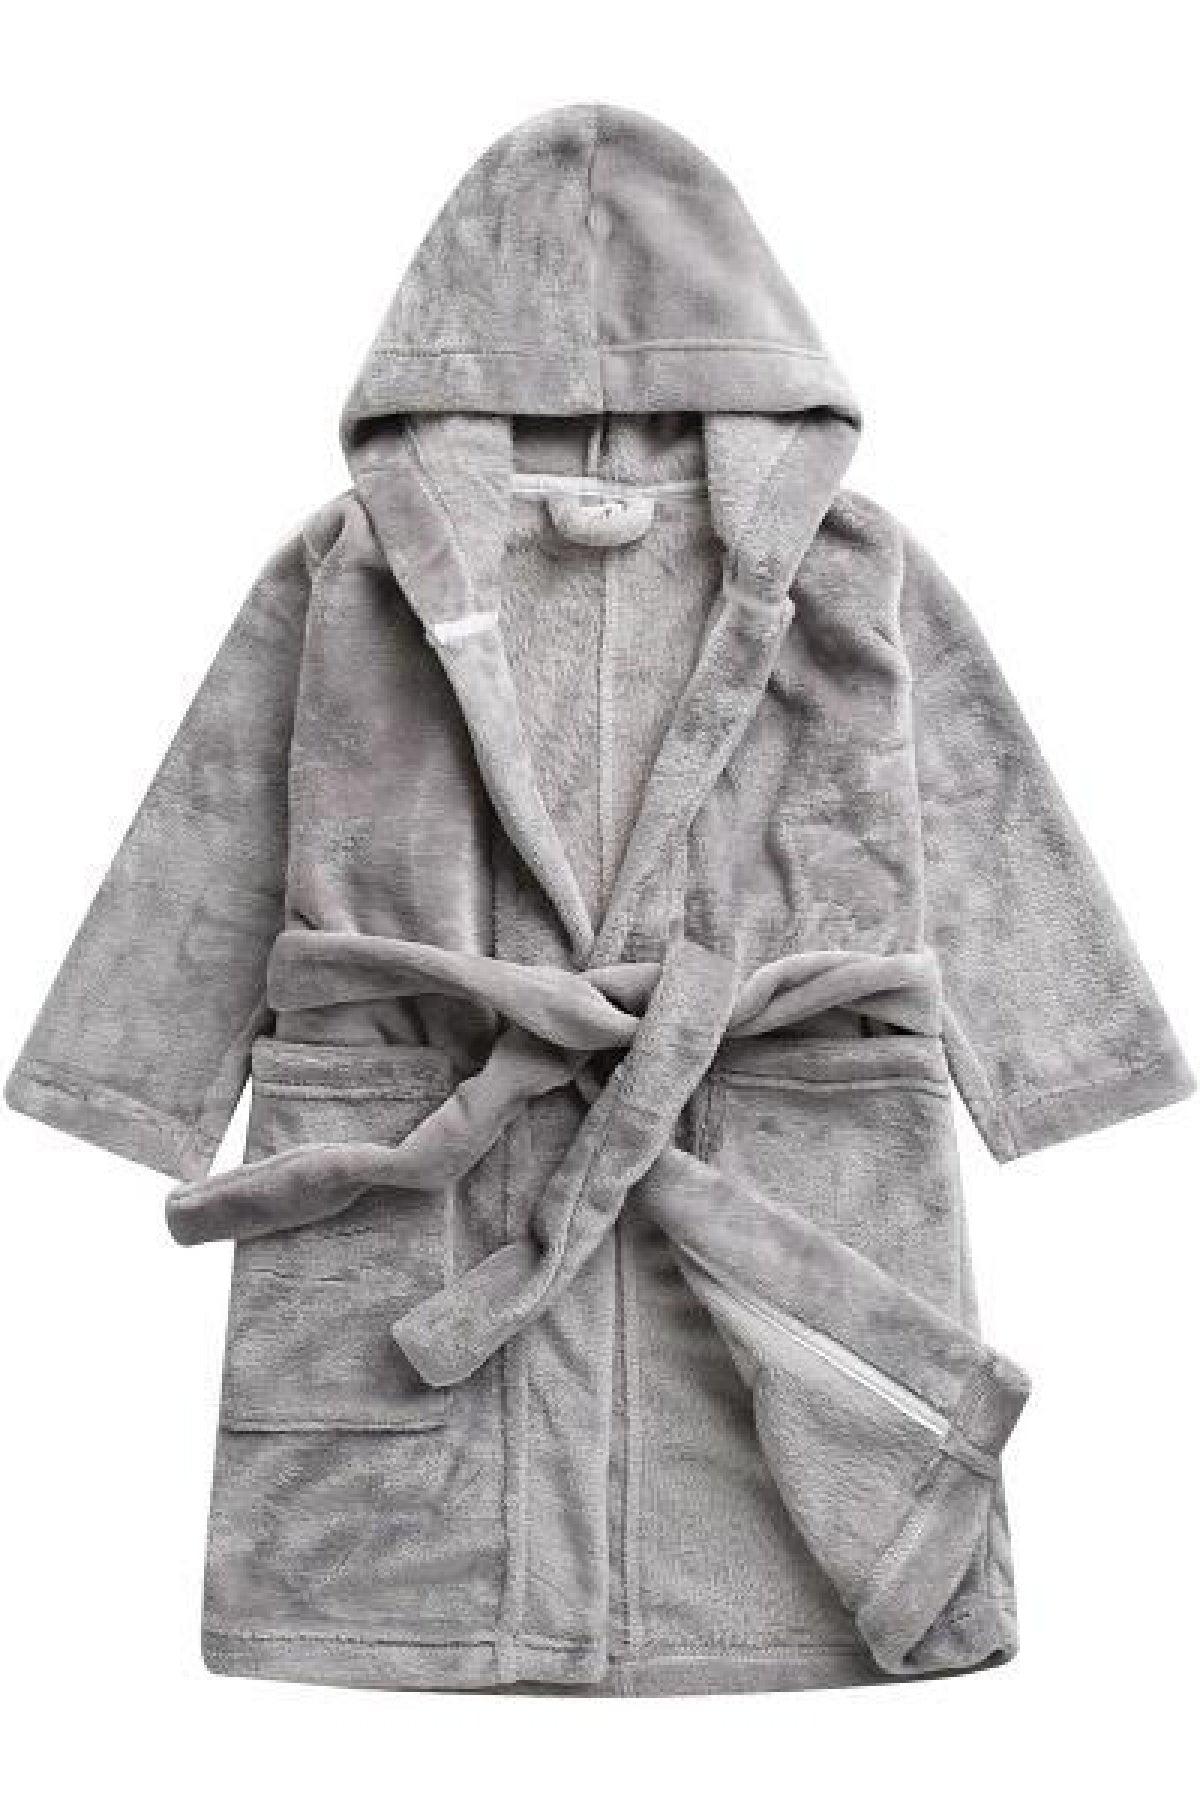 Soft grey hooded robe